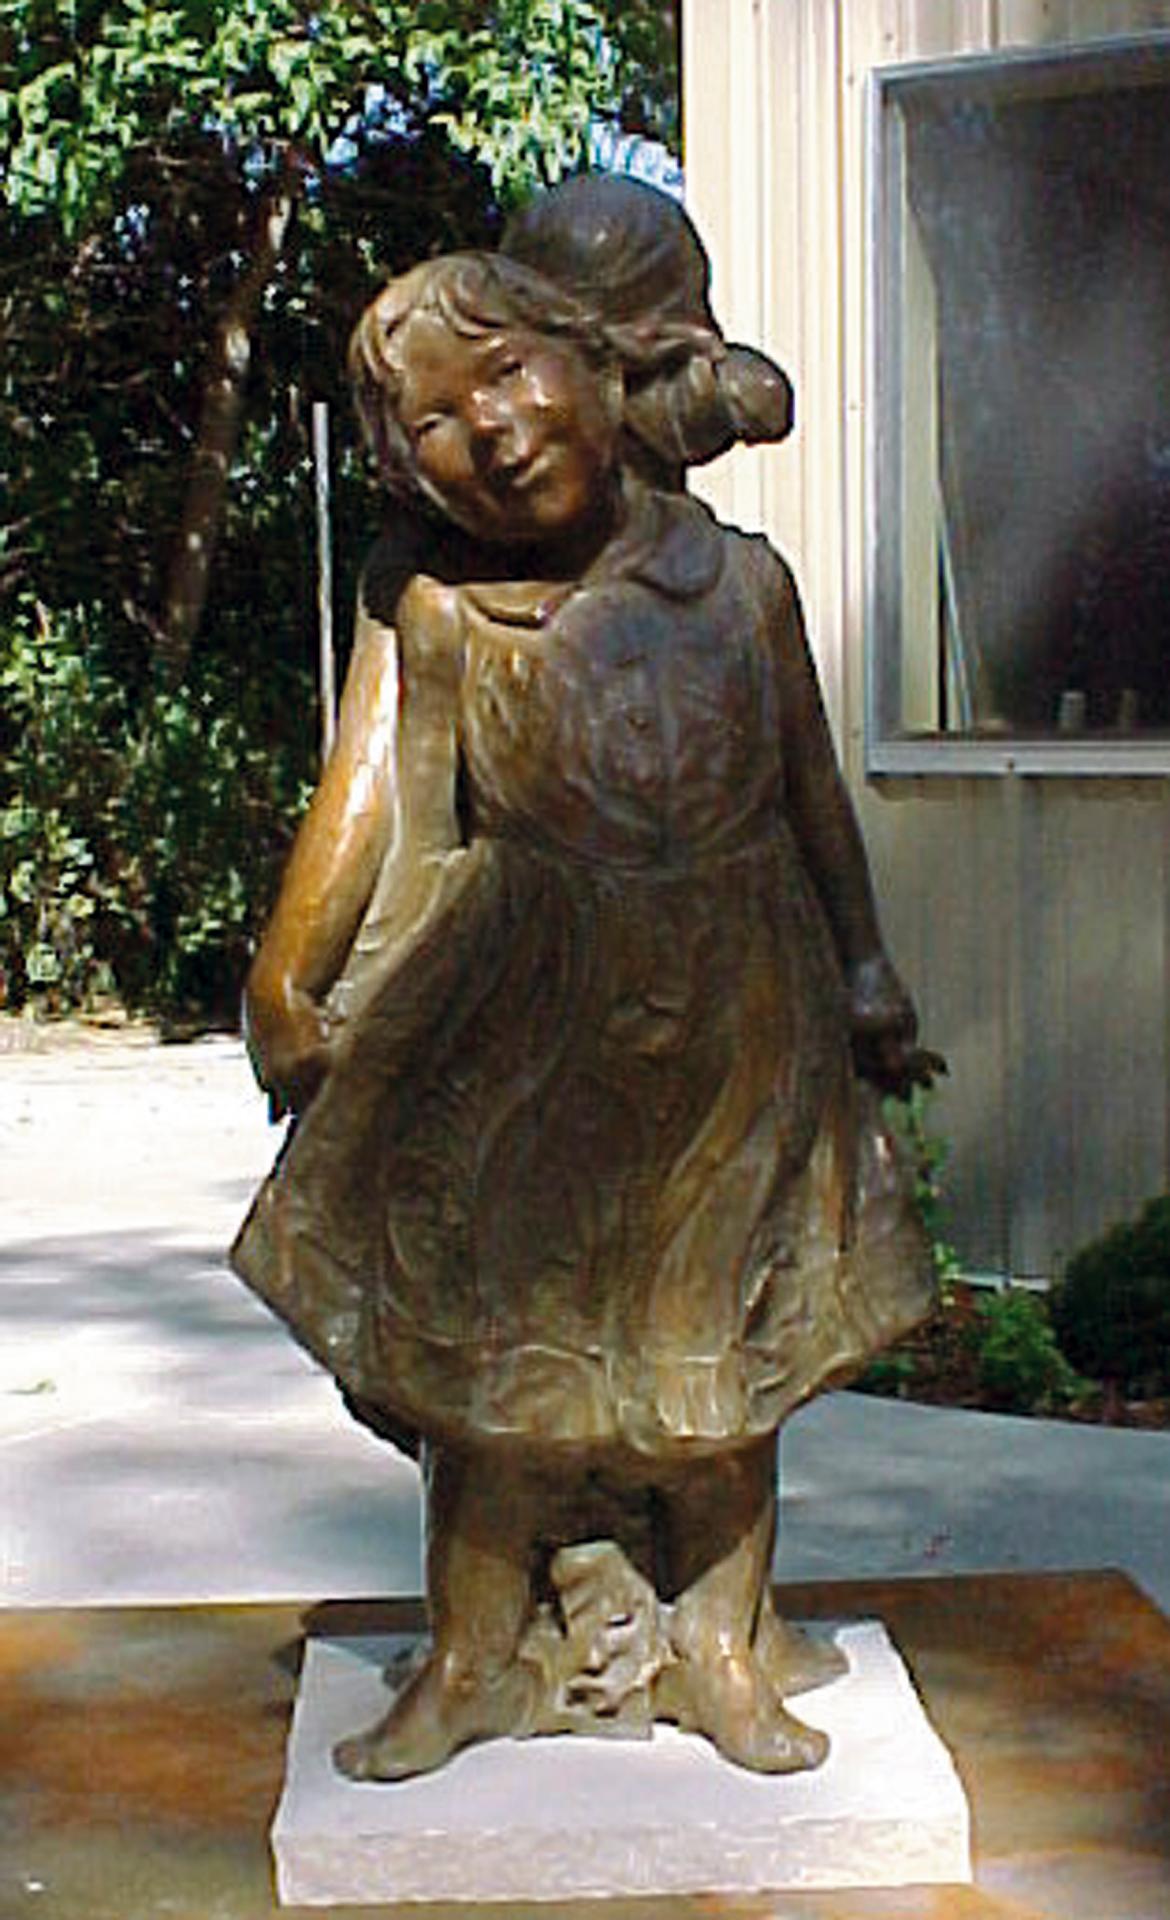 Standing Together by Jane DeDecker
Figurative Bronze. 42x24x24